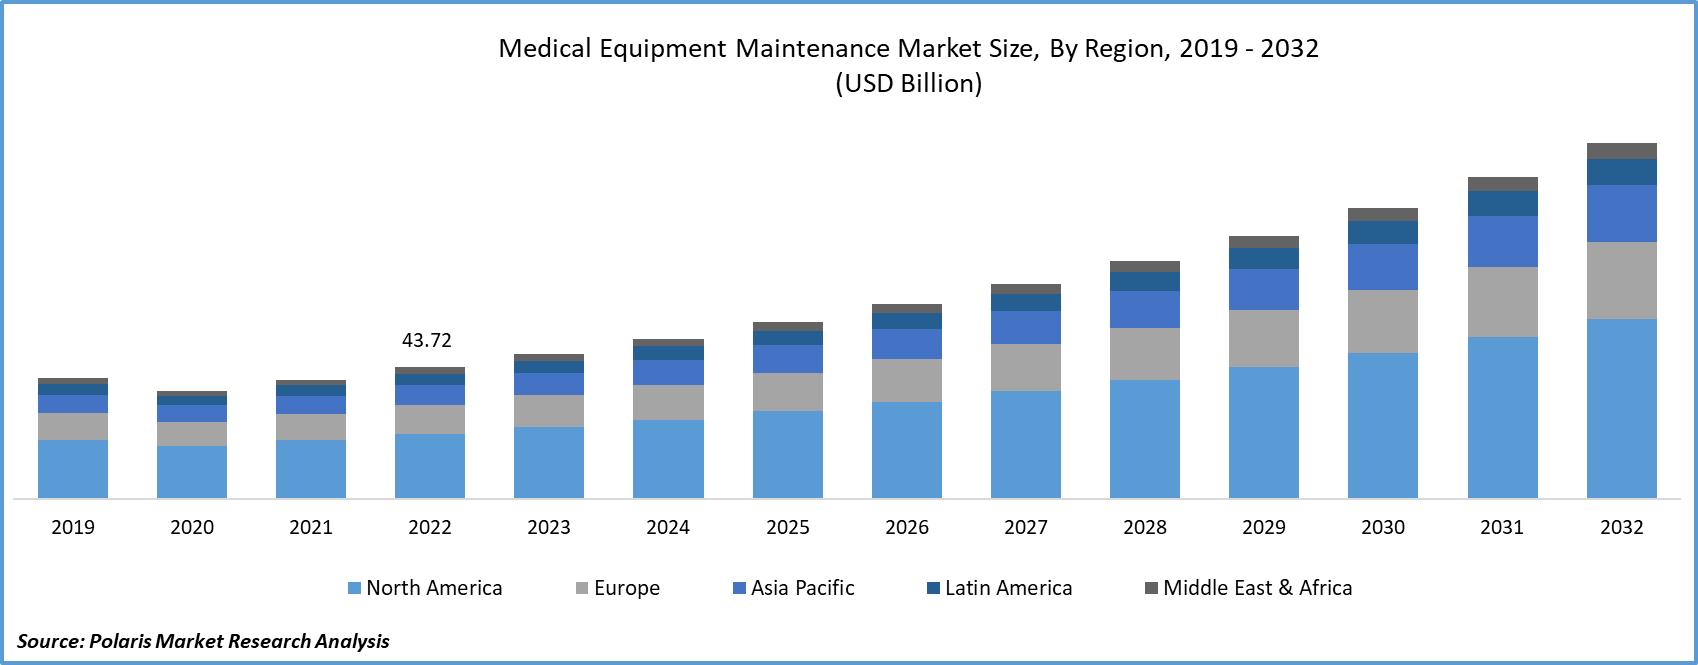 Medical Equipment Maintenance Market Size